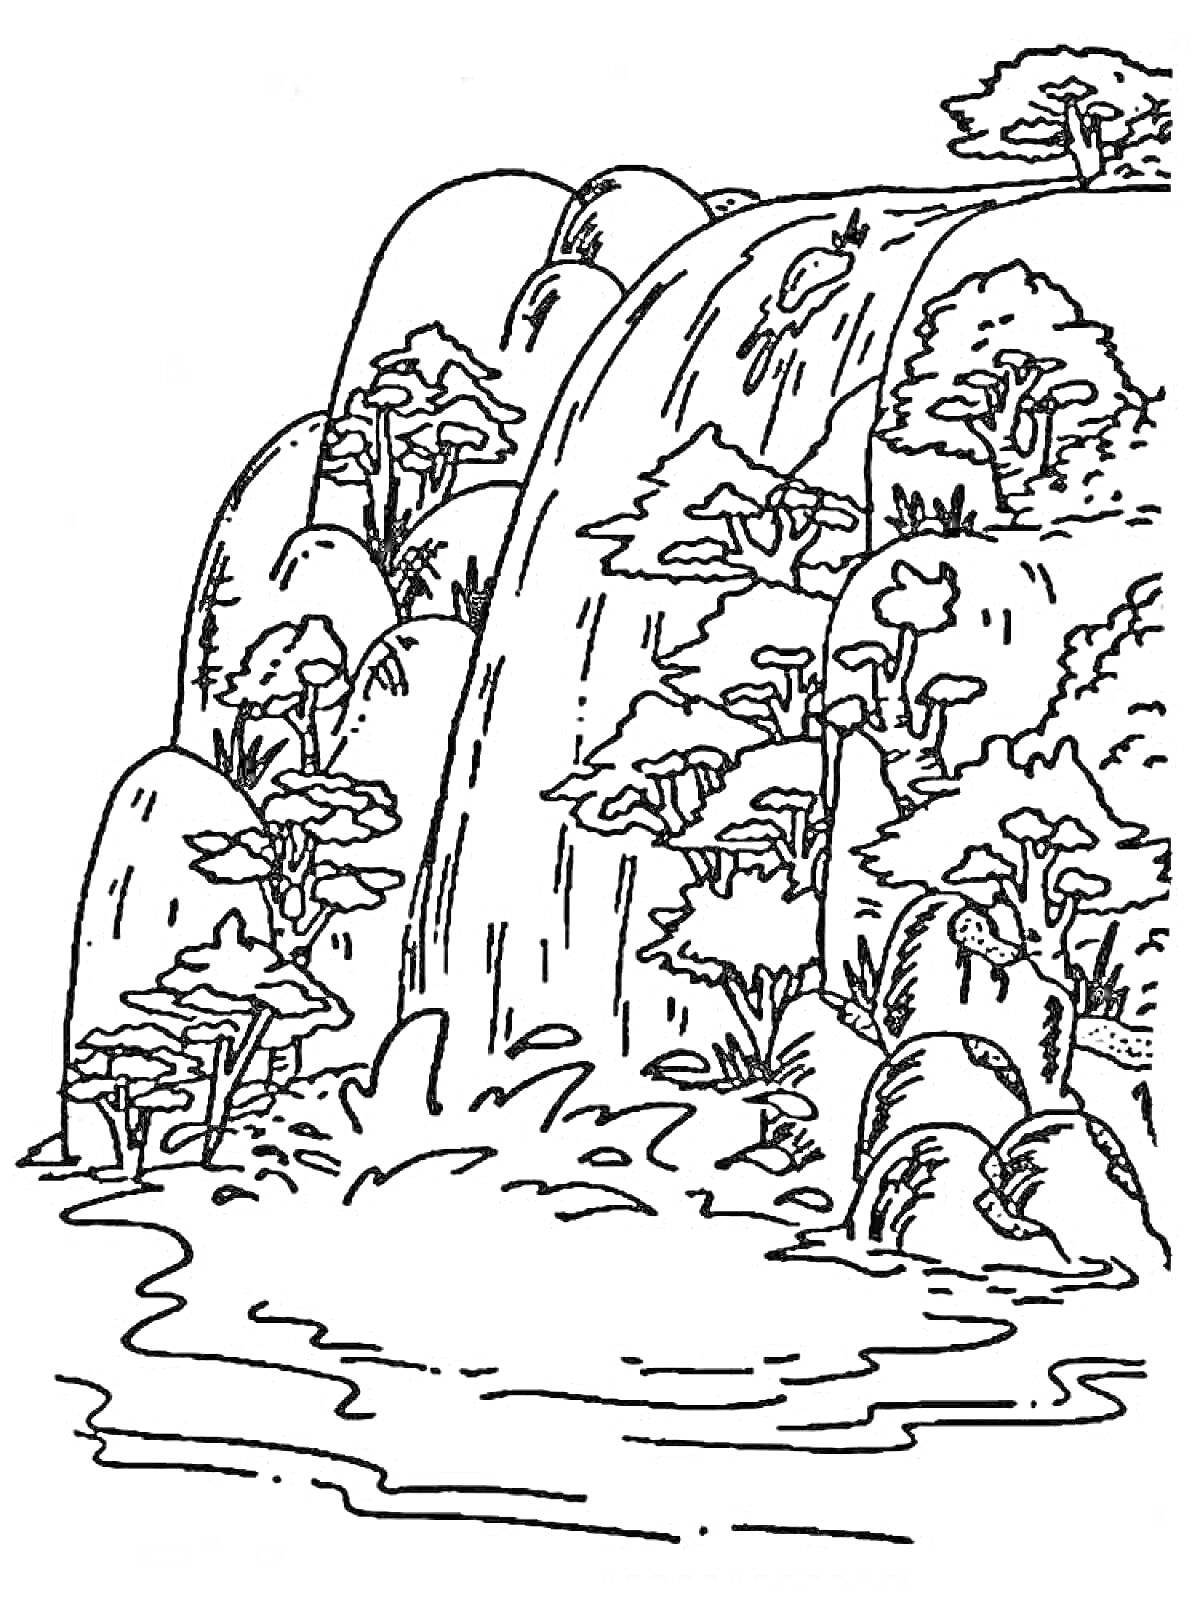 Водопад в горах с окружающими деревьями на склонах